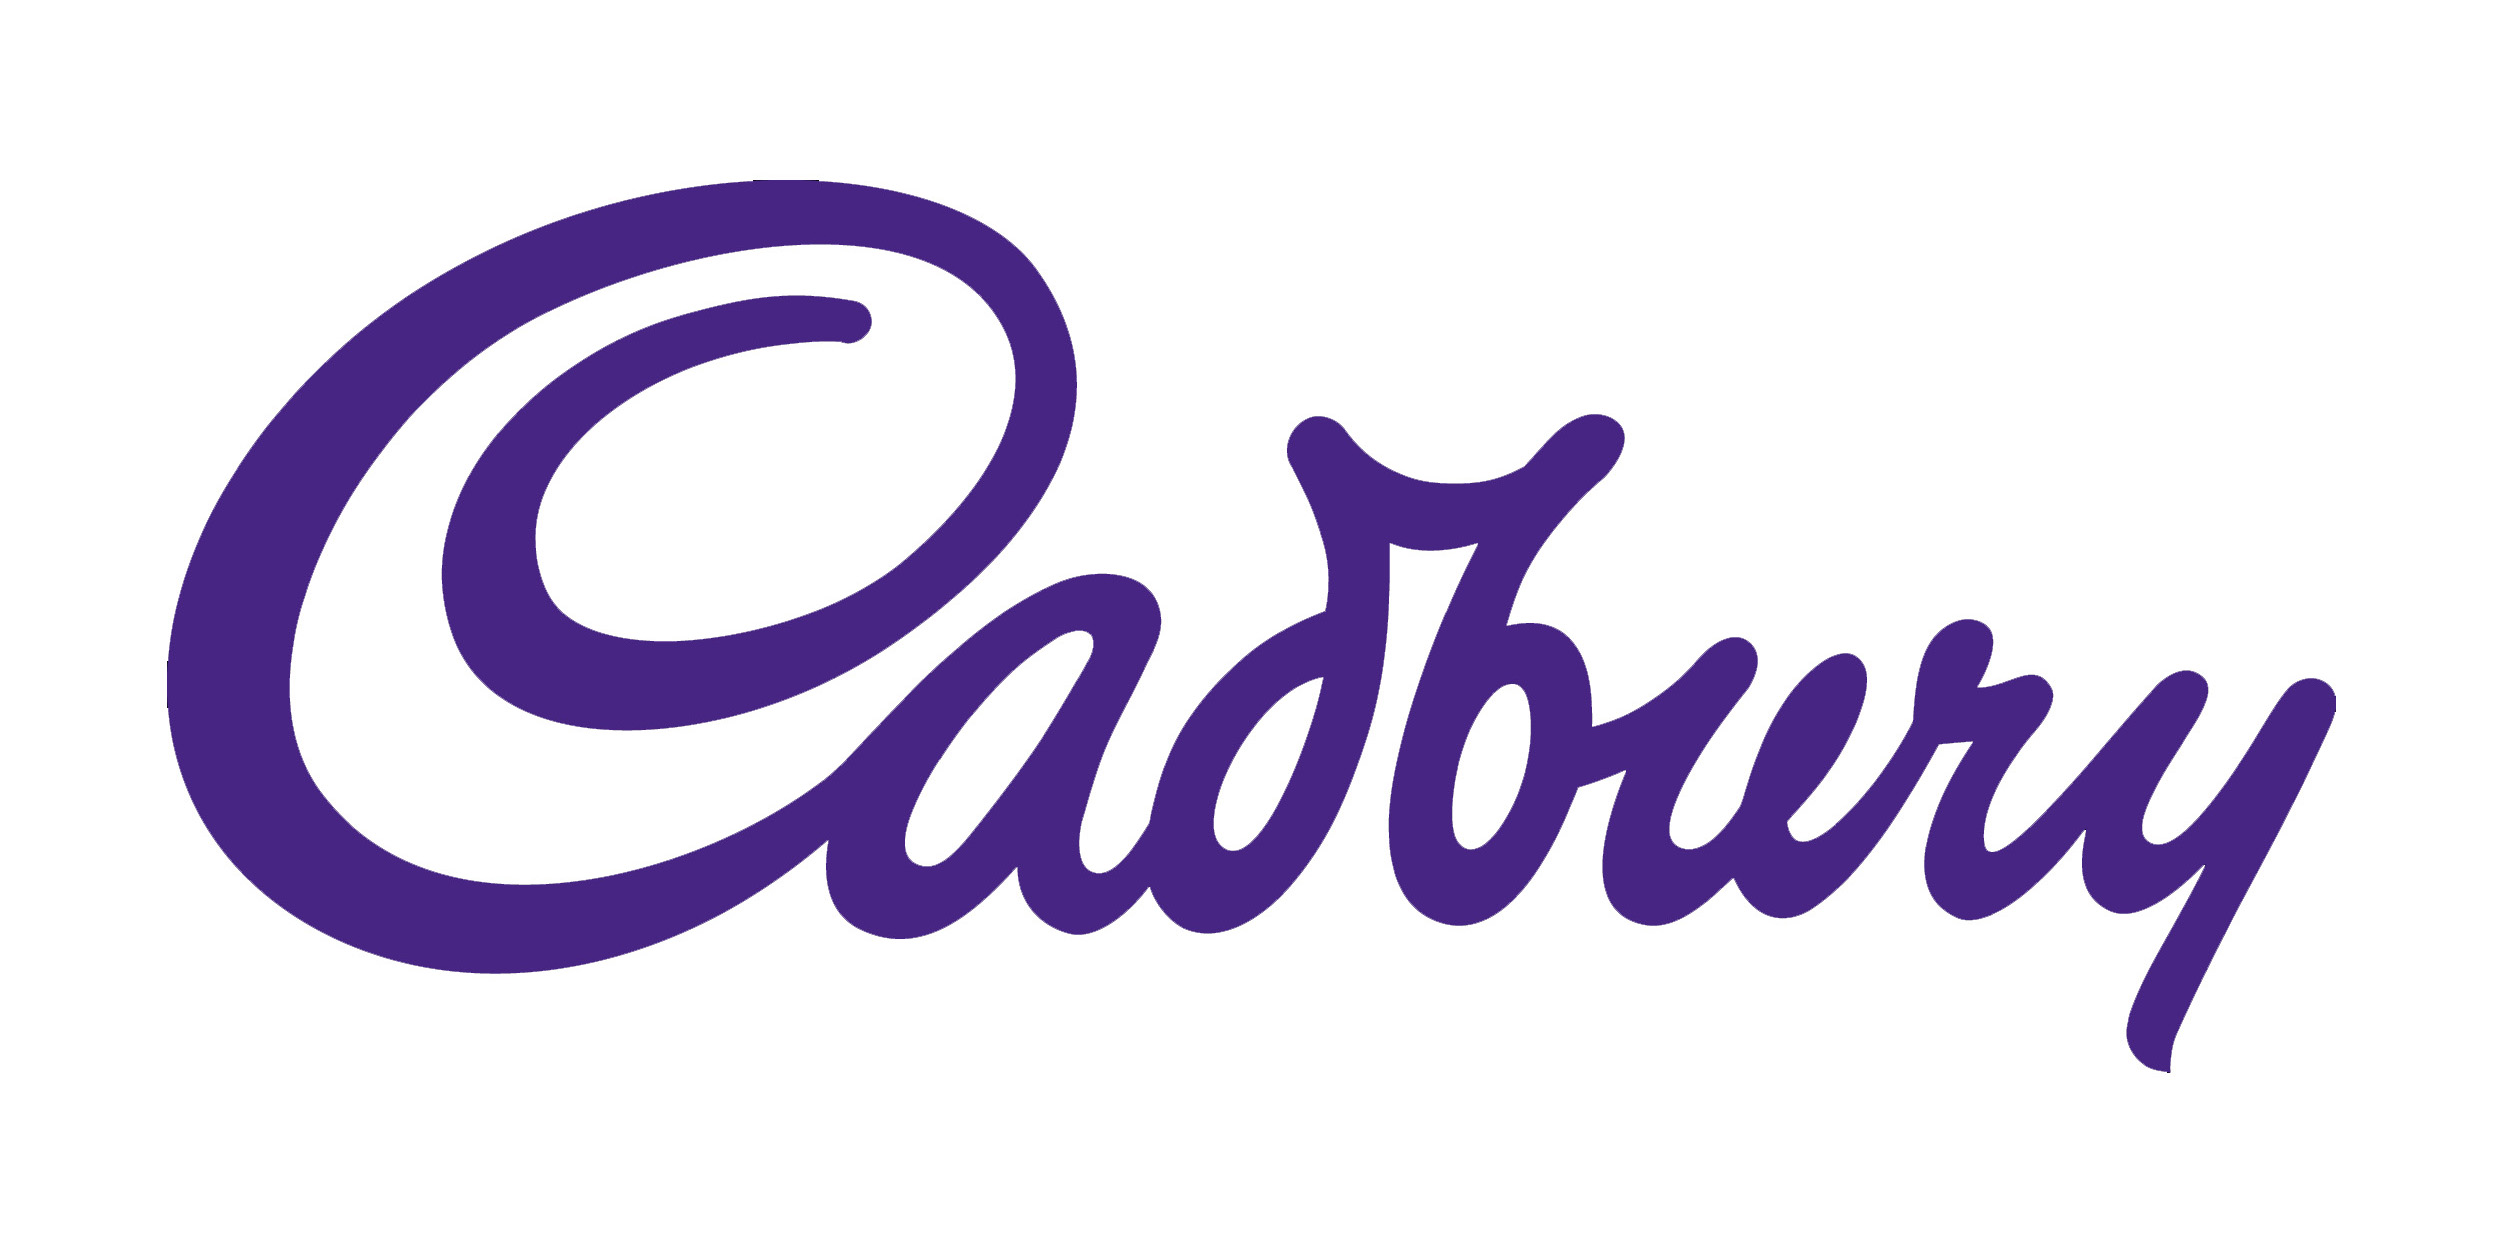 Cadbury Cakes